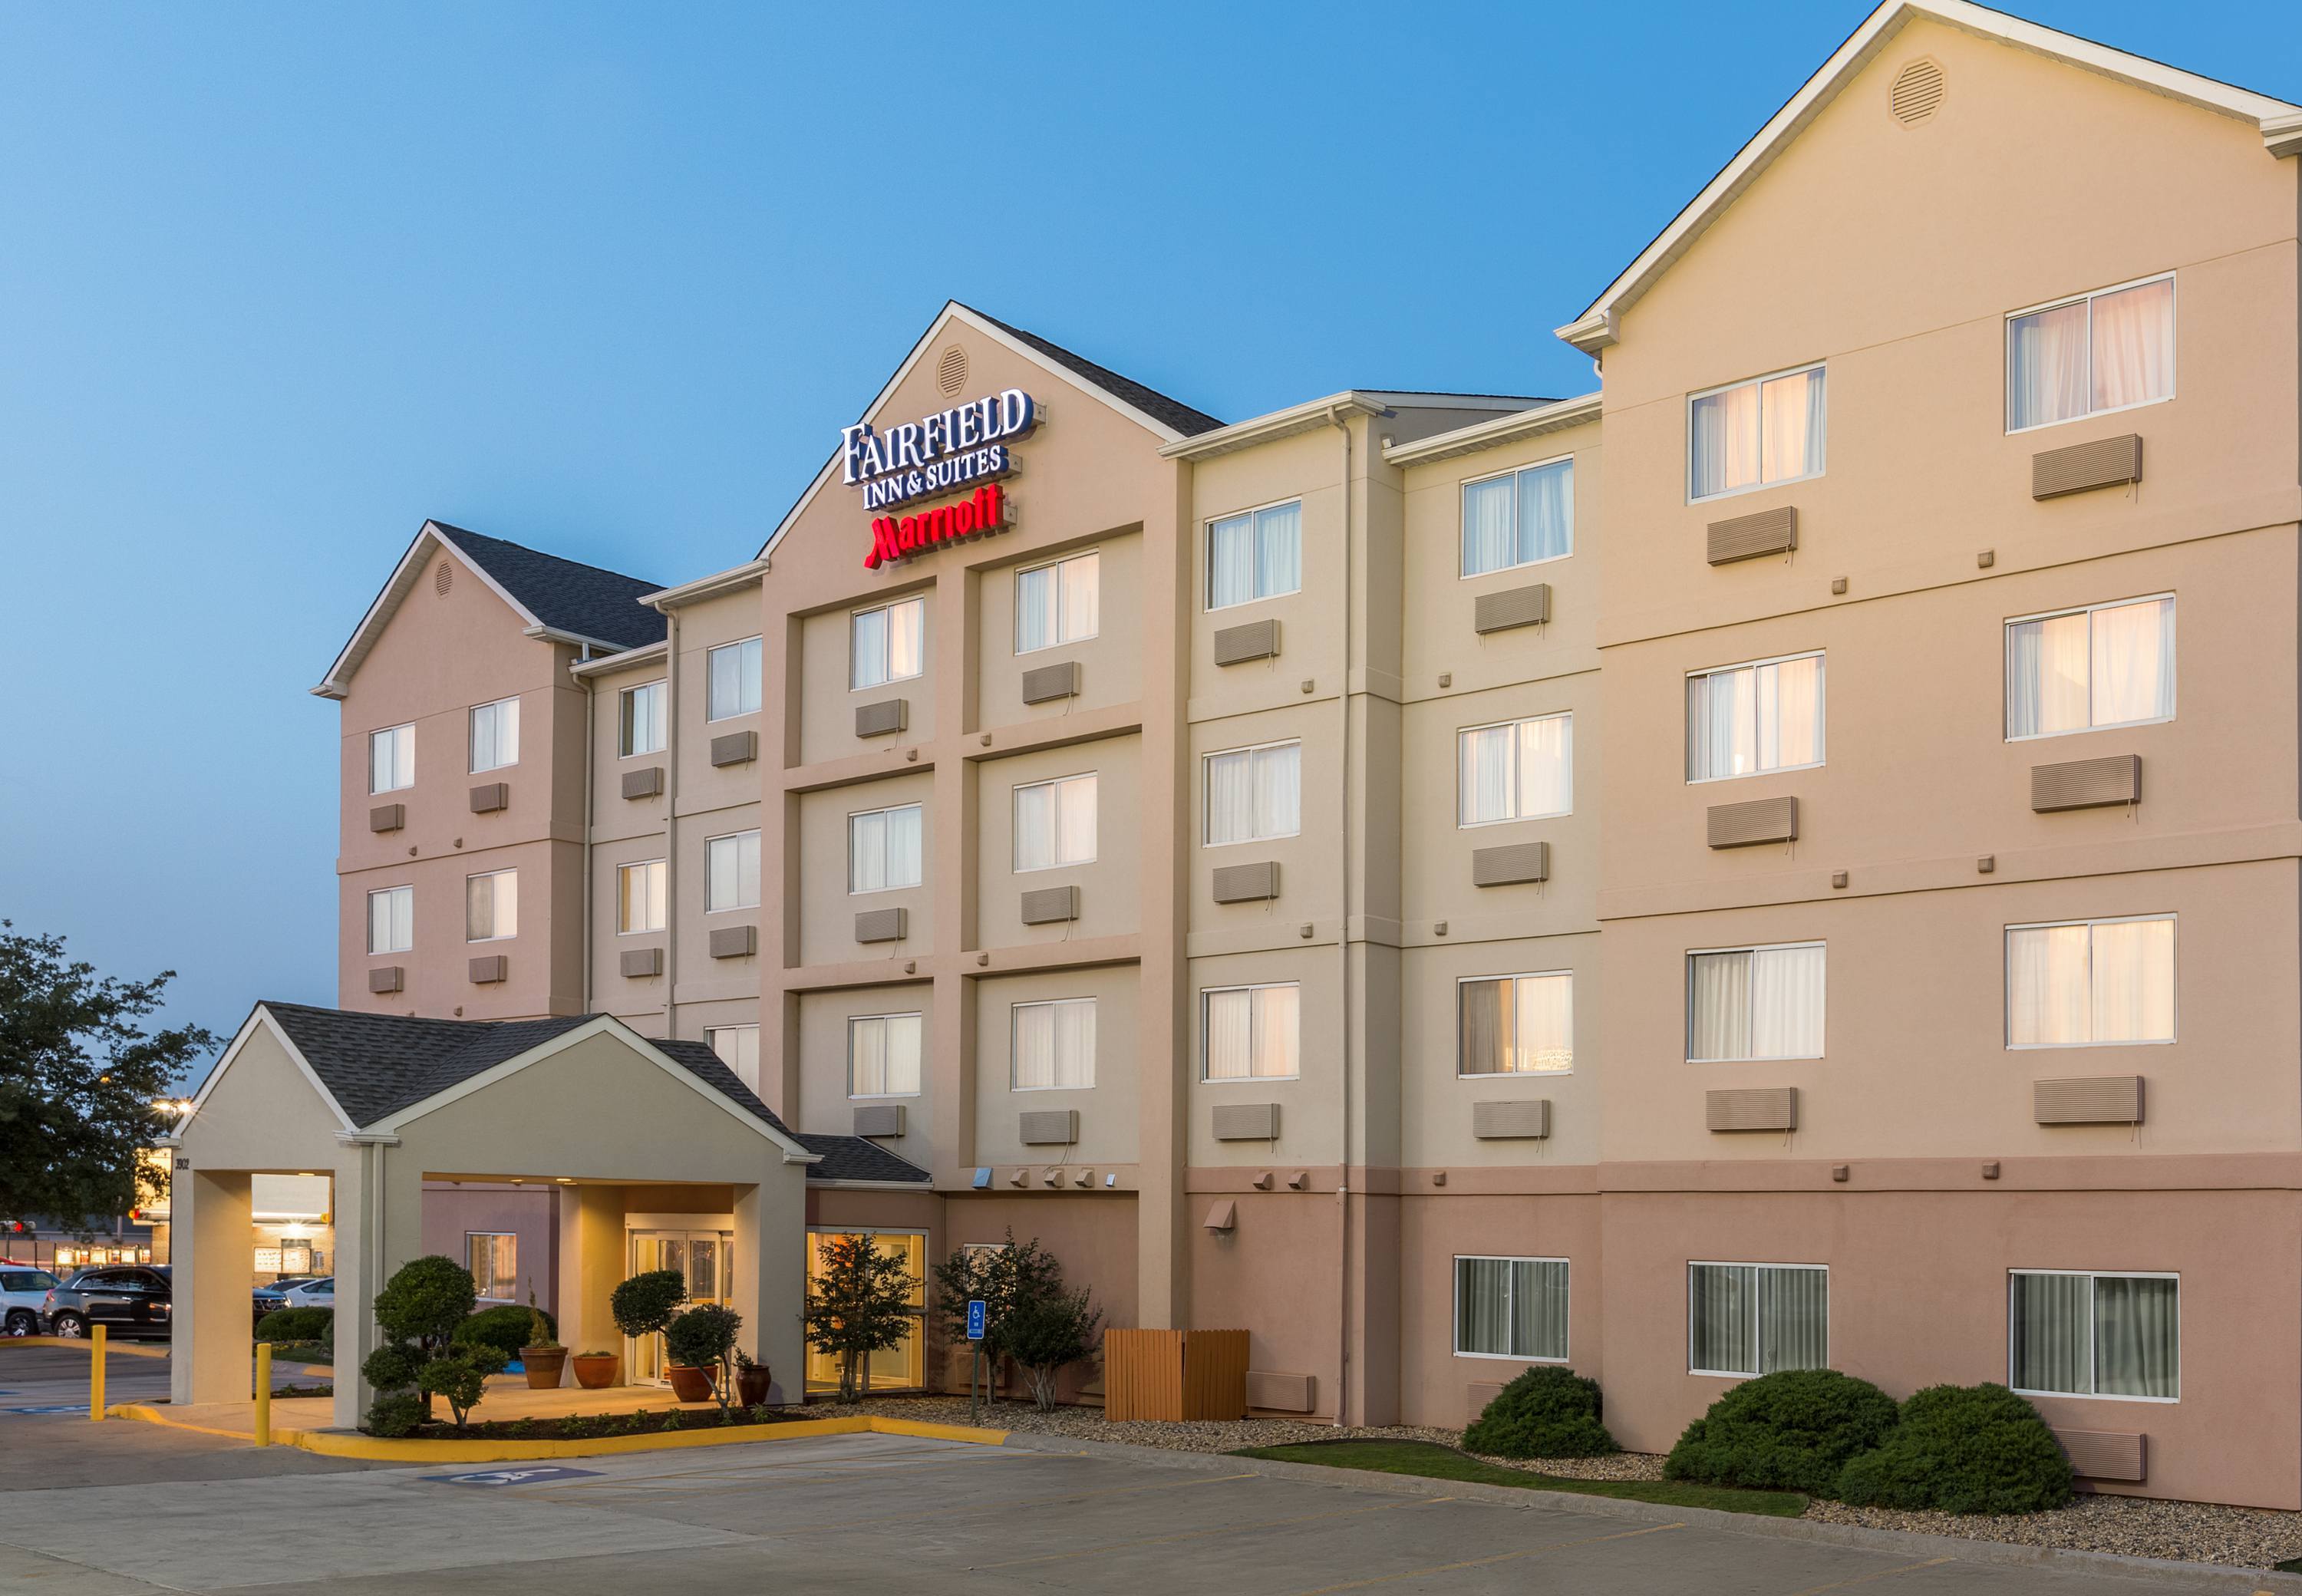 Photo of Fairfield Inn & Suites by Marriott Abilene, Abilene, TX